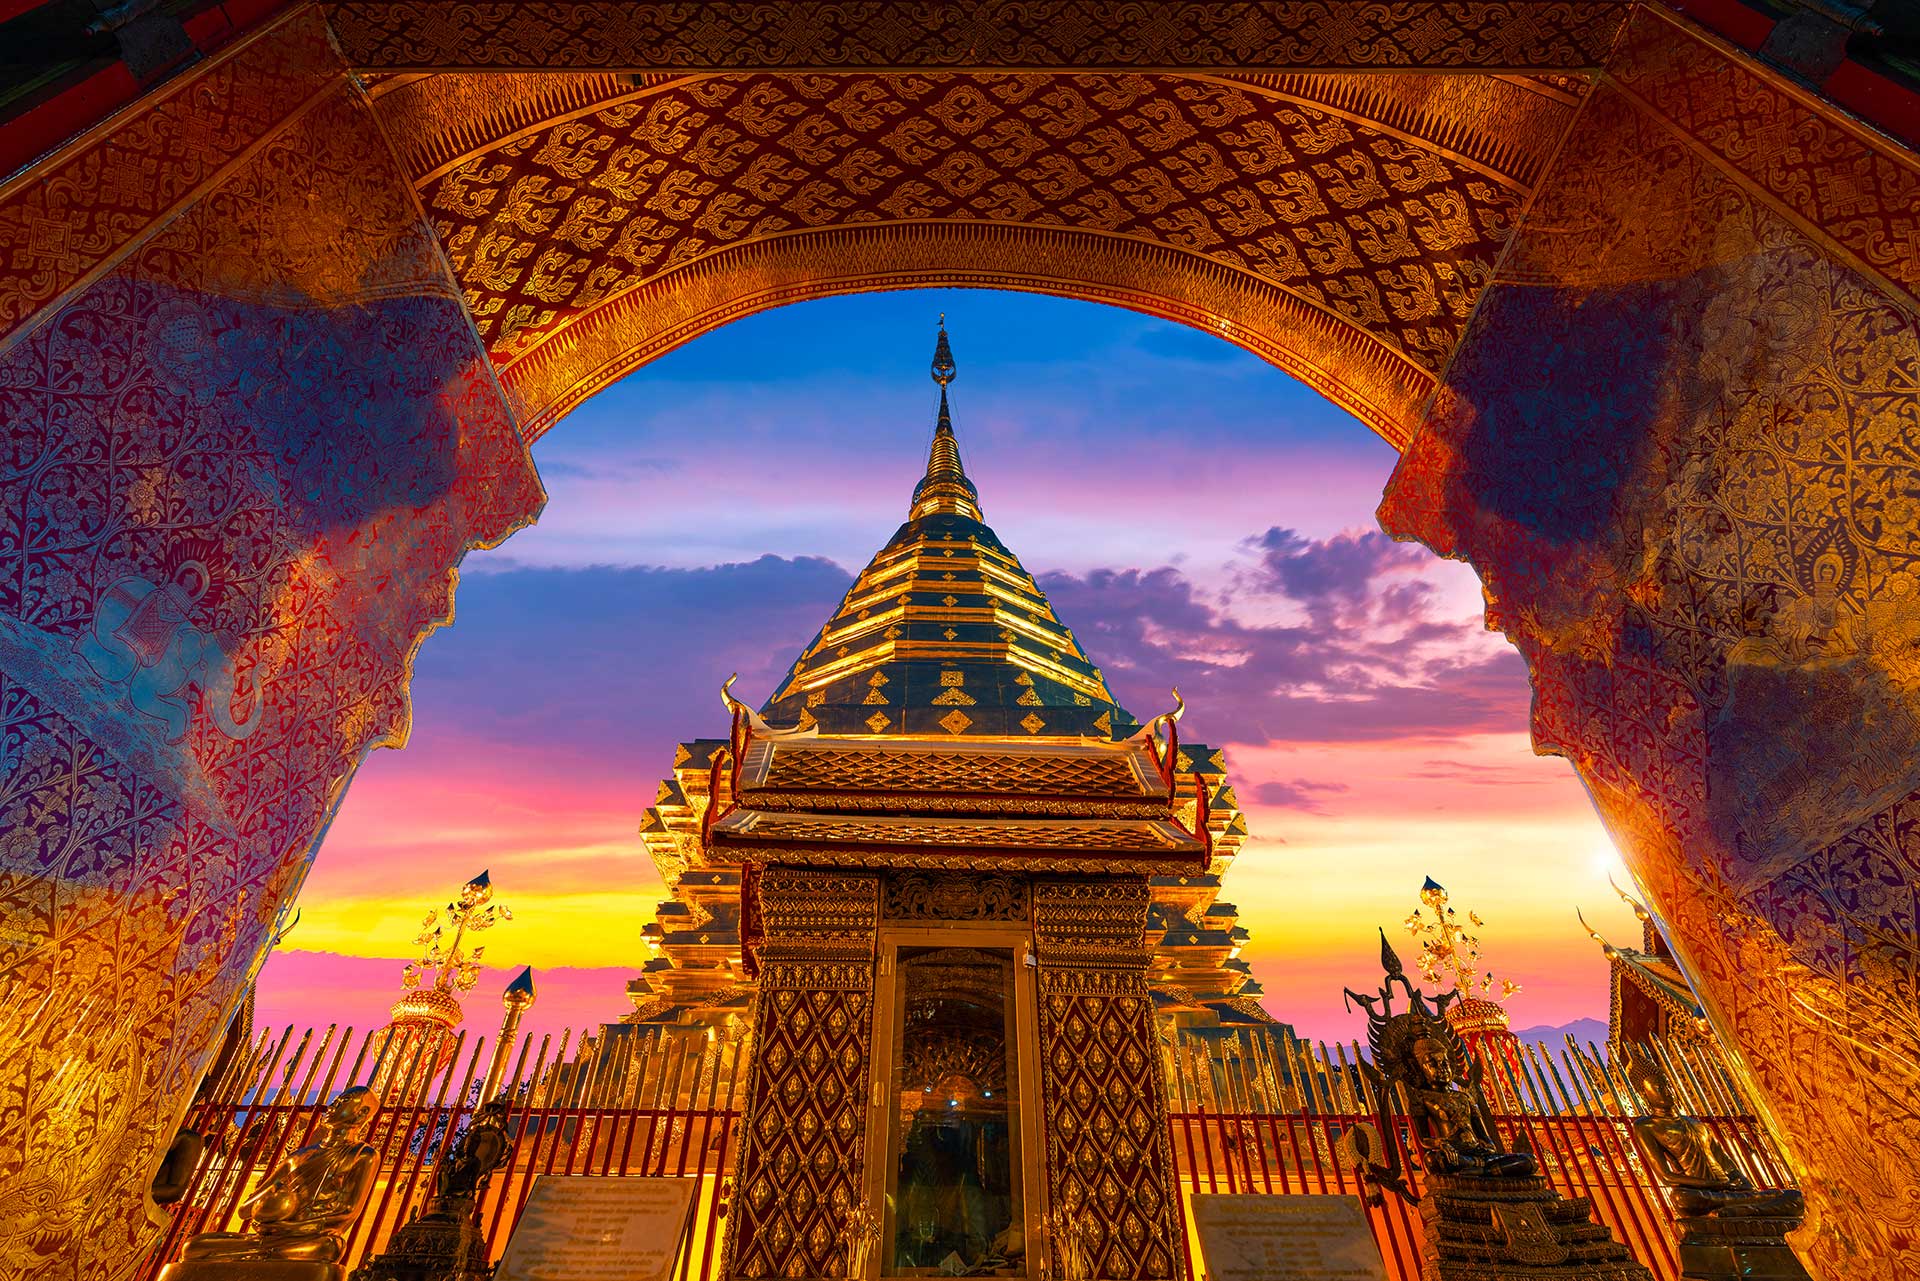 Host City - Chiang Mai